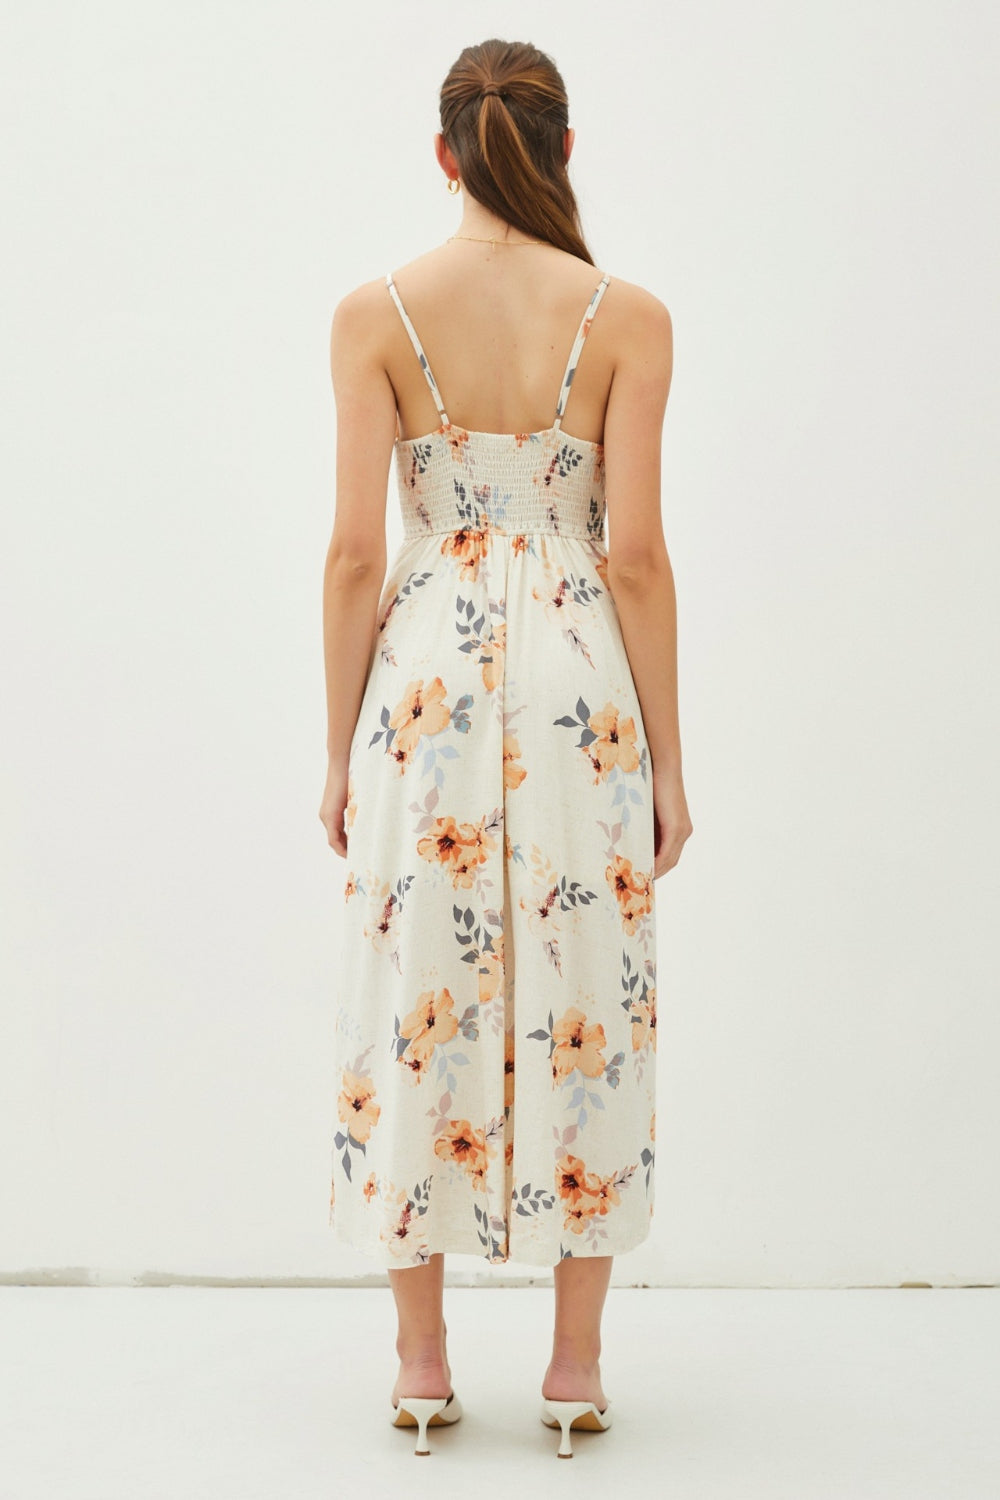 Summer Beach Wedding Guest Midi Dress - Floral Button-Down Cami Style for Women